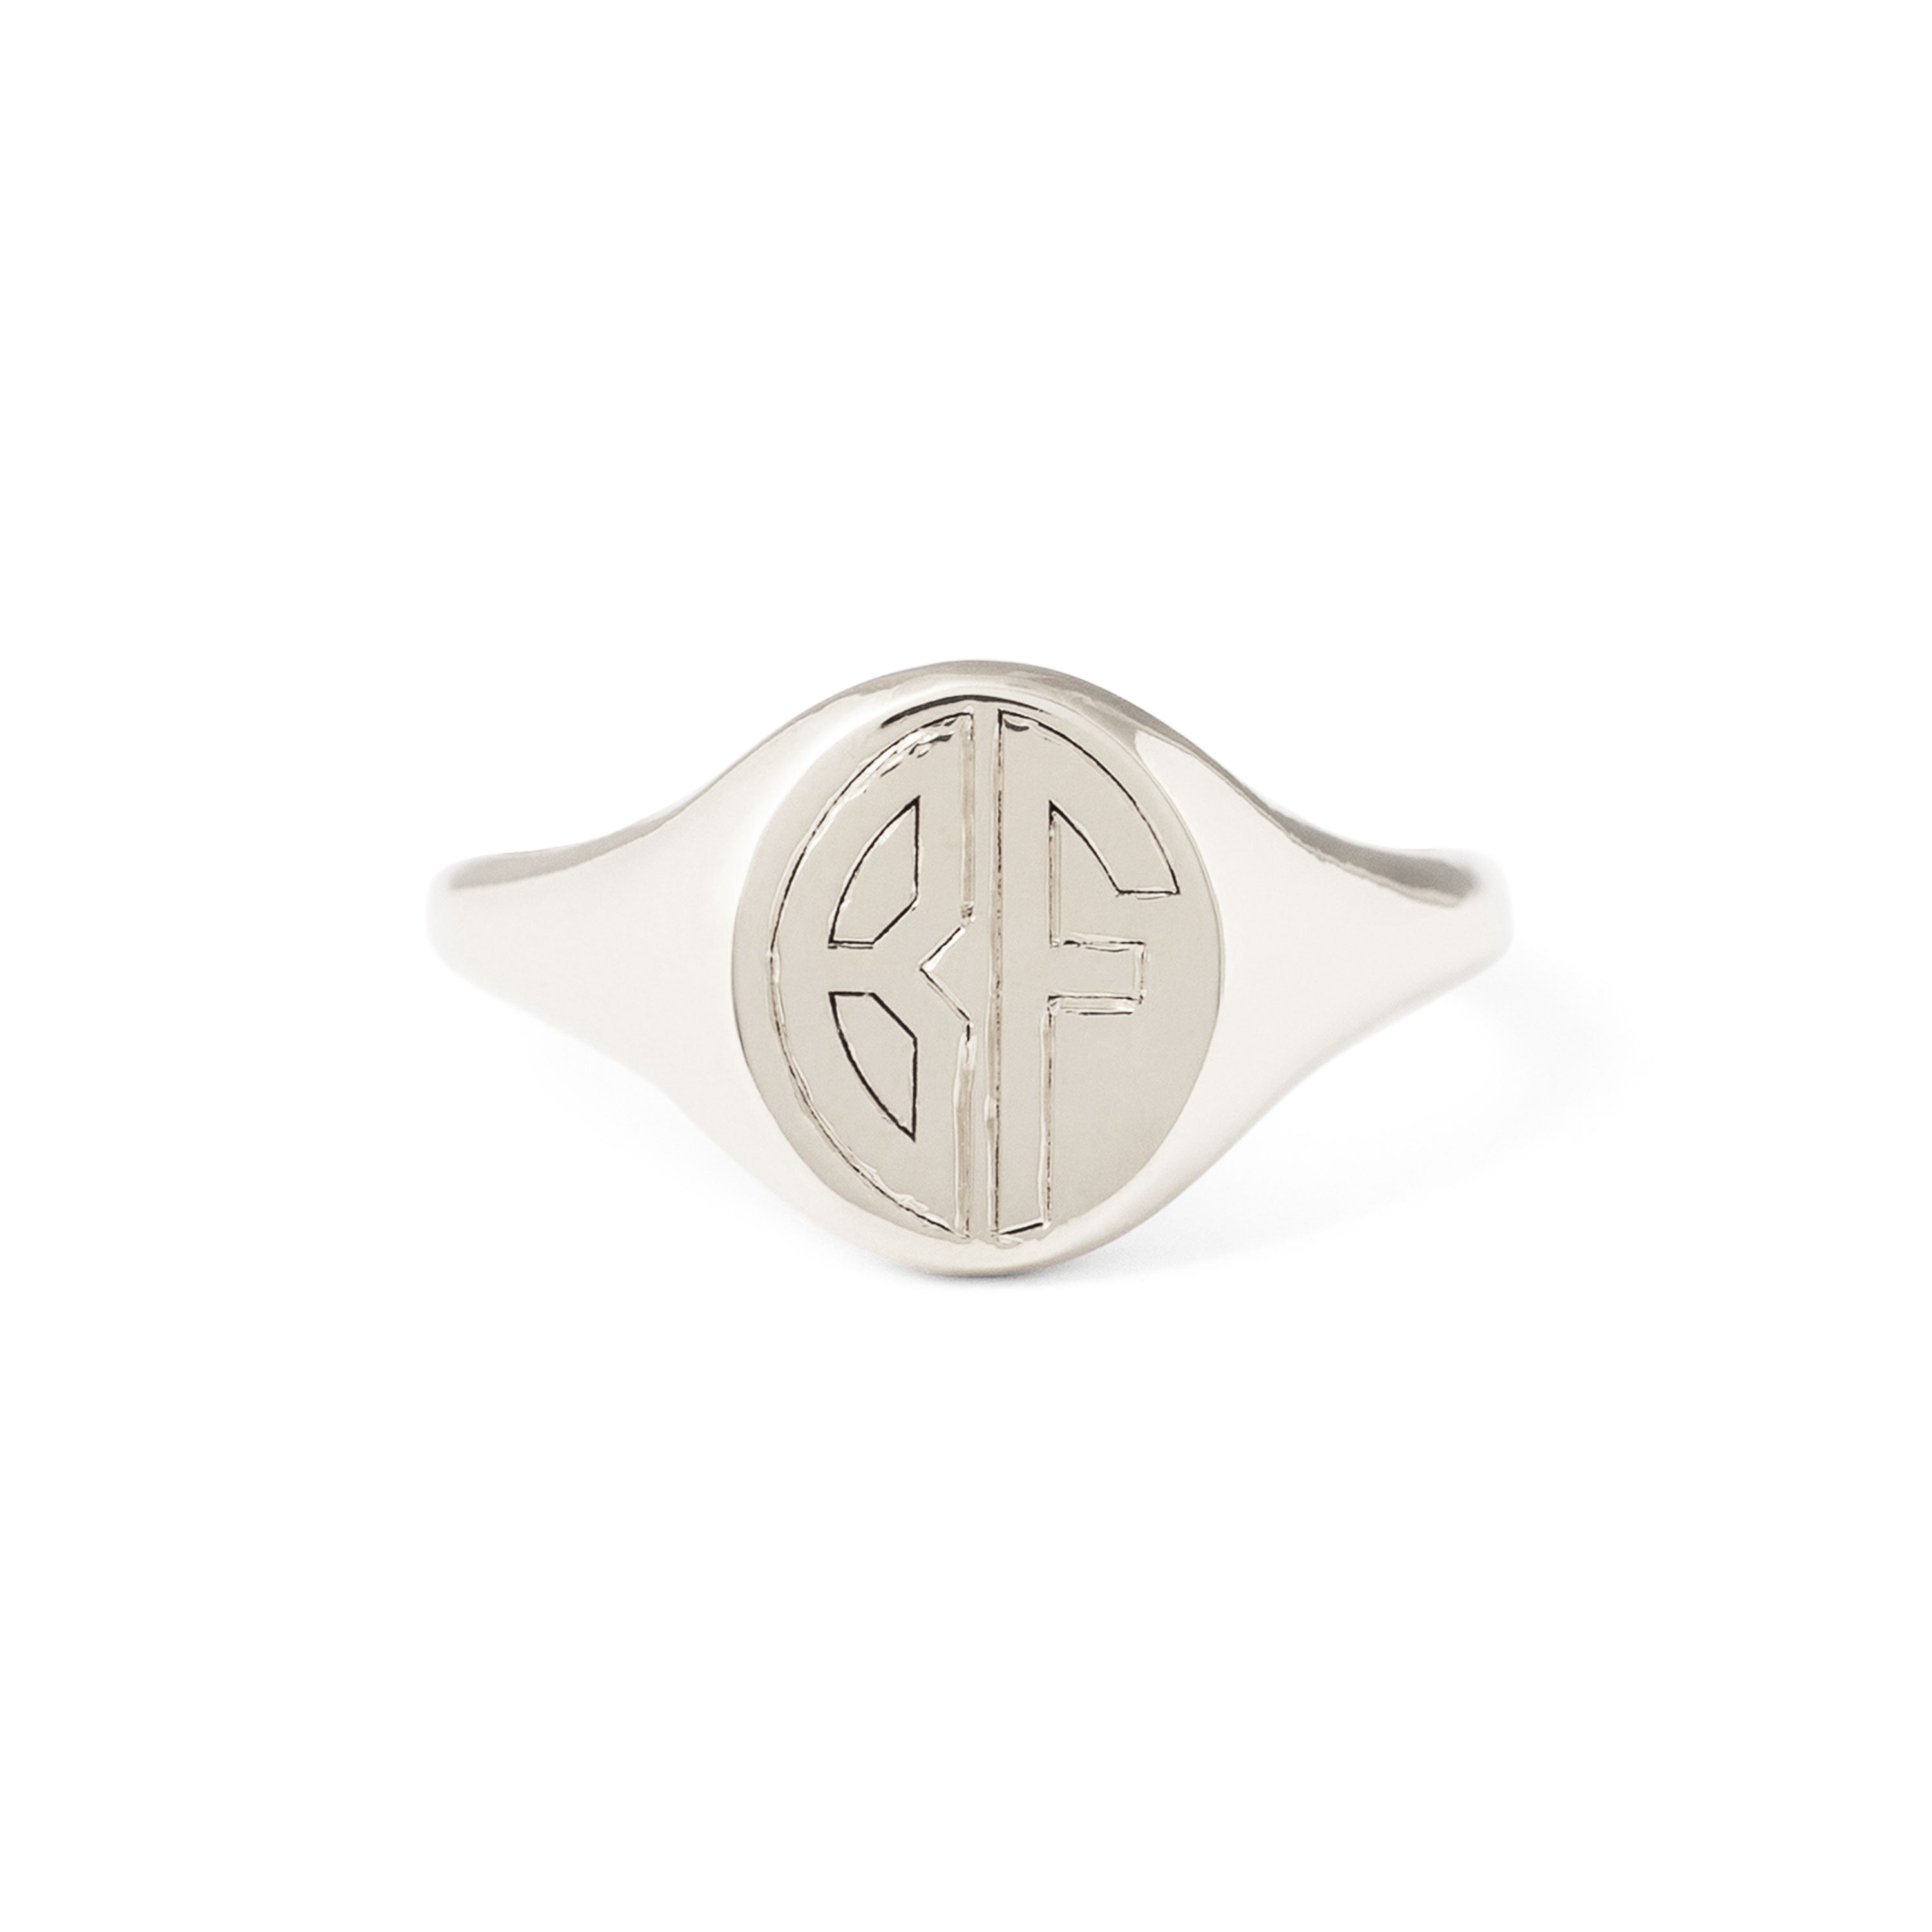 The F&B Petite Gold Signet Ring